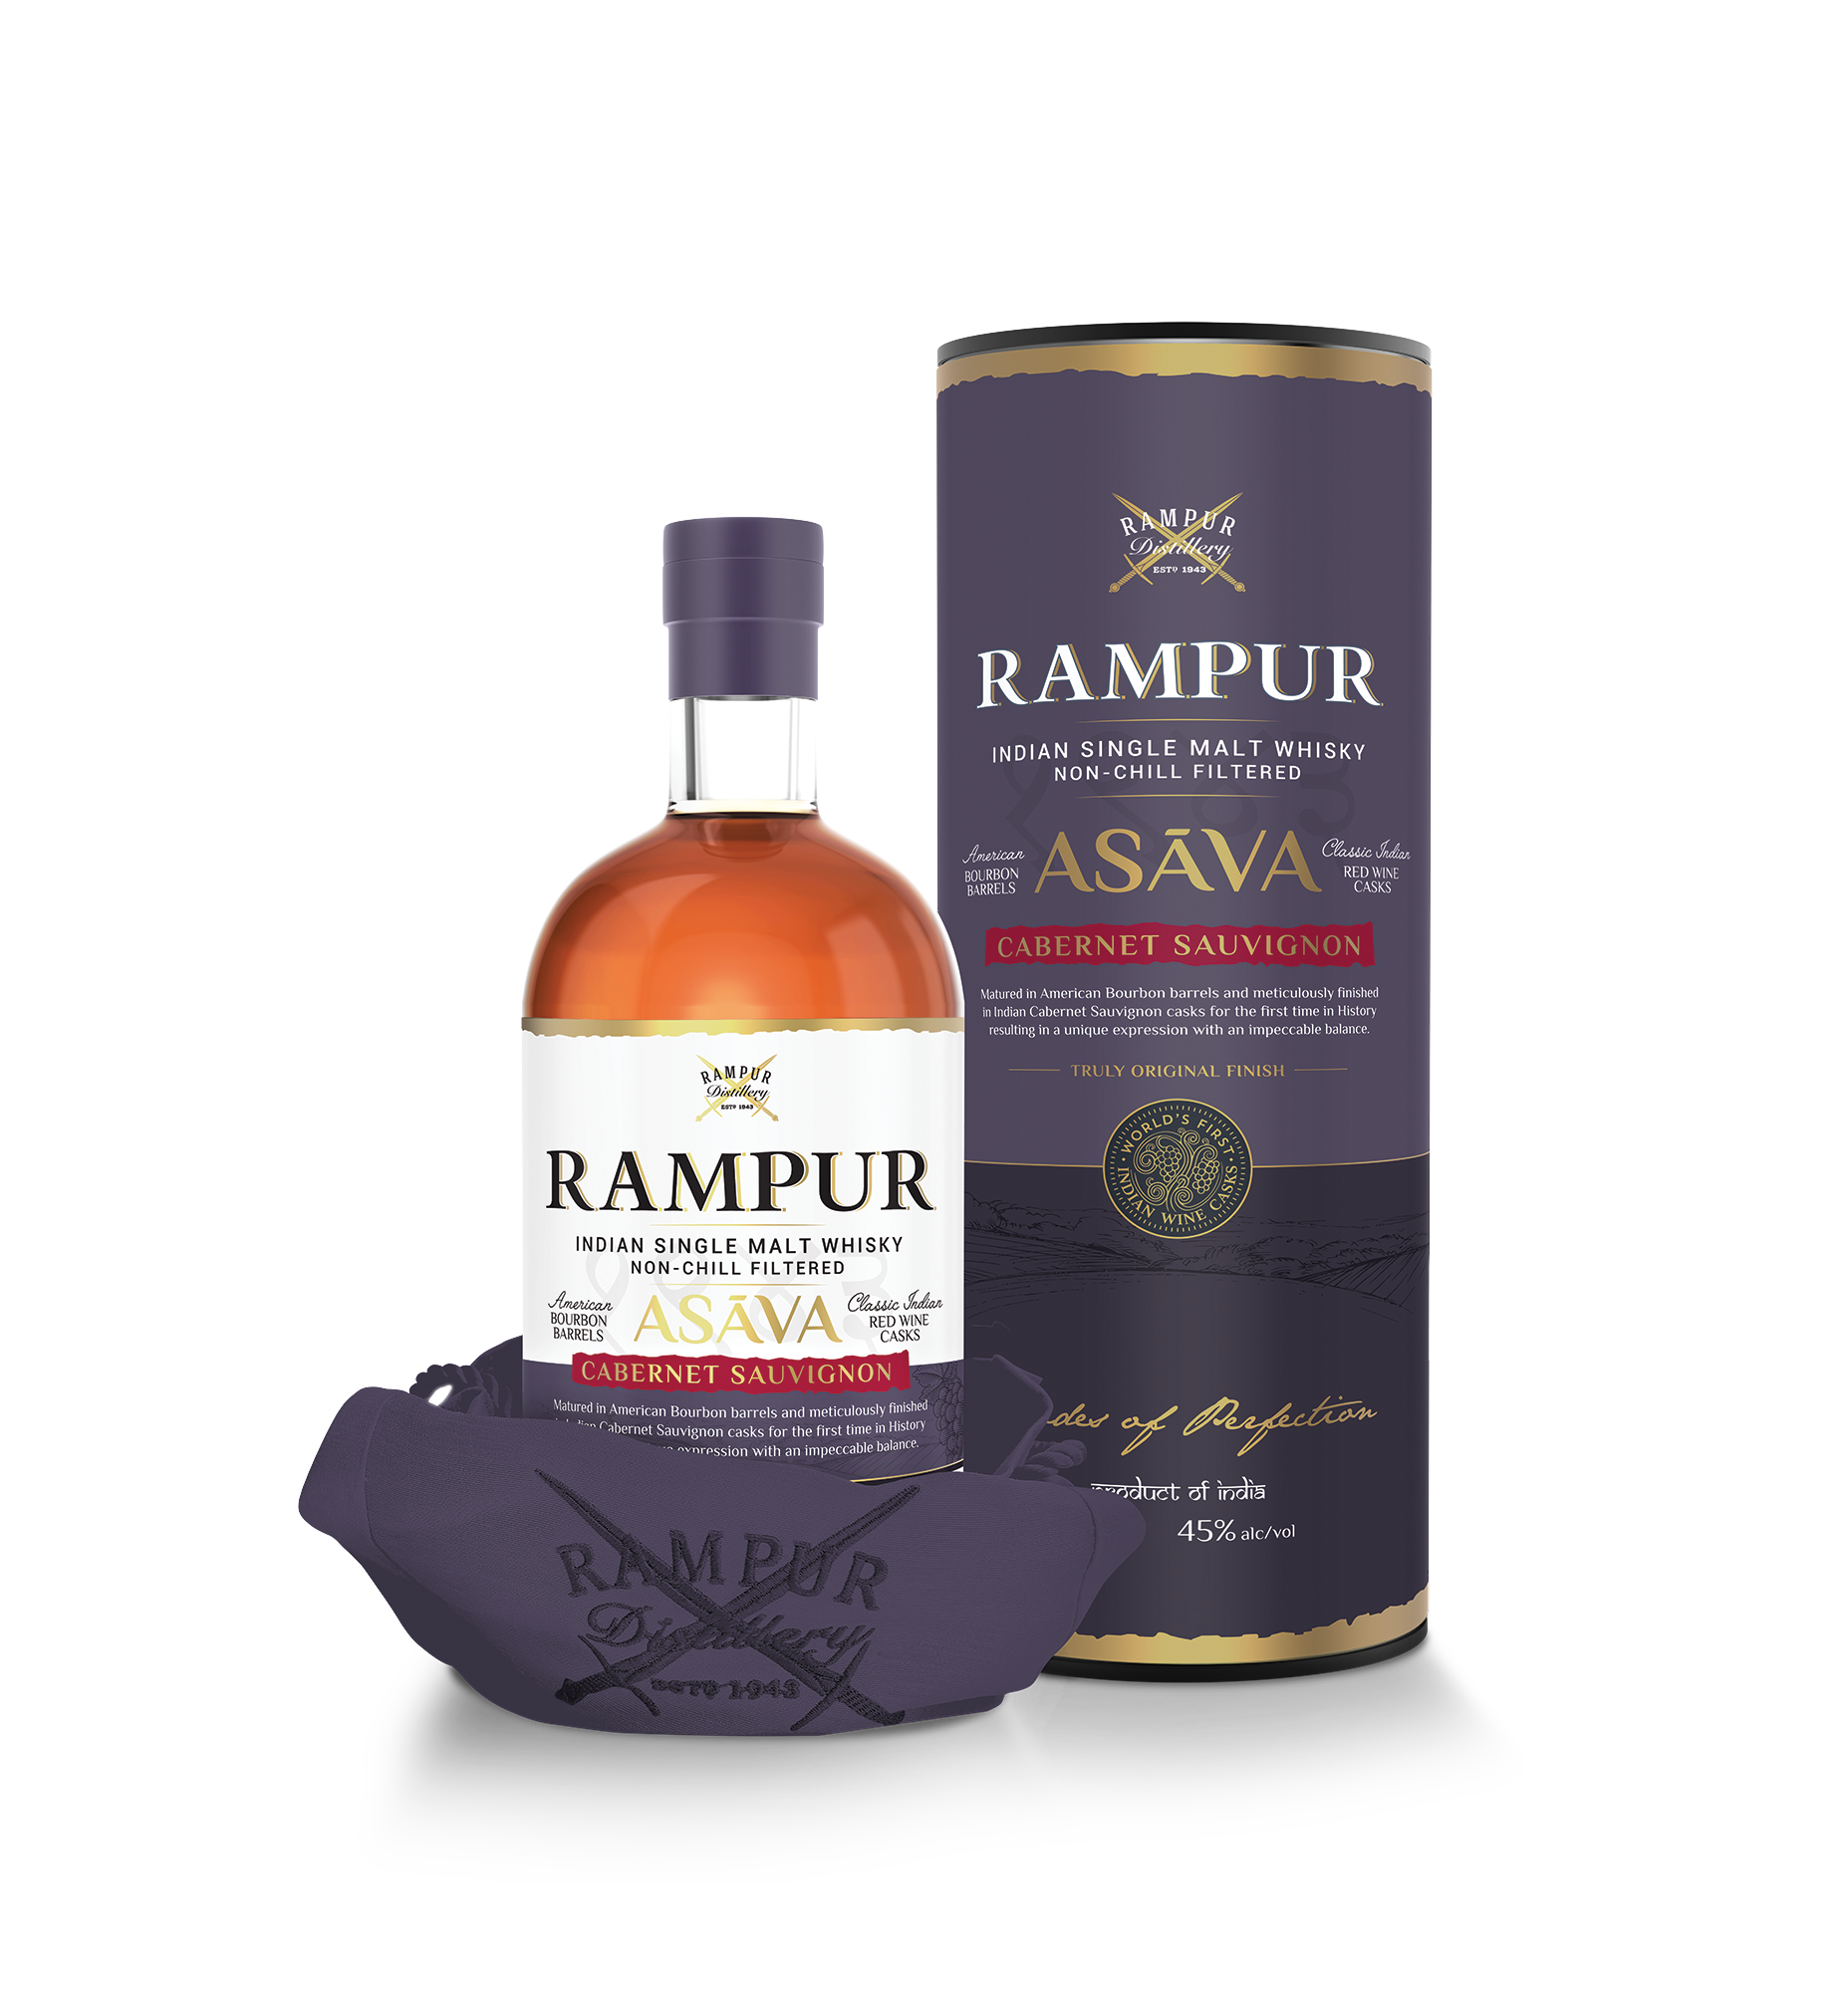 Radico Khaitan brings internationally acclaimed Rampur Asava Indian Single Malt Whisky to Indian markets